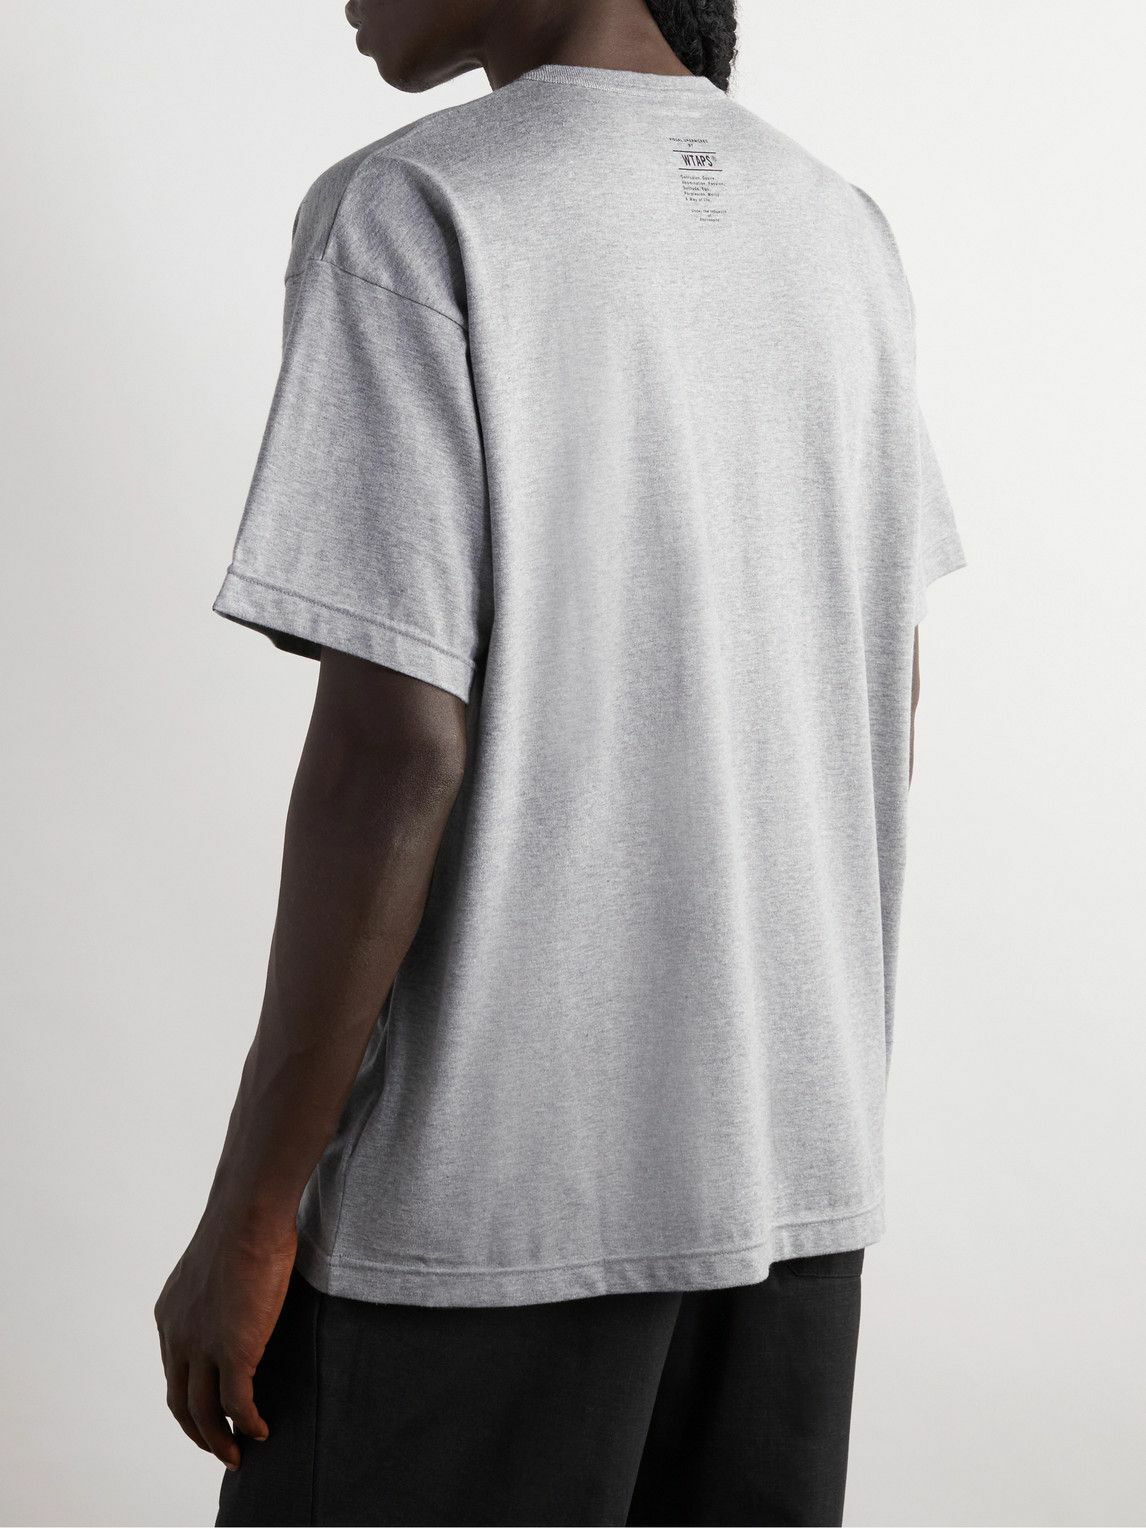 WTAPS - Academy Logo-Appliquéd Printed Cotton-Blend Jersey T-Shirt - Gray  WTAPS